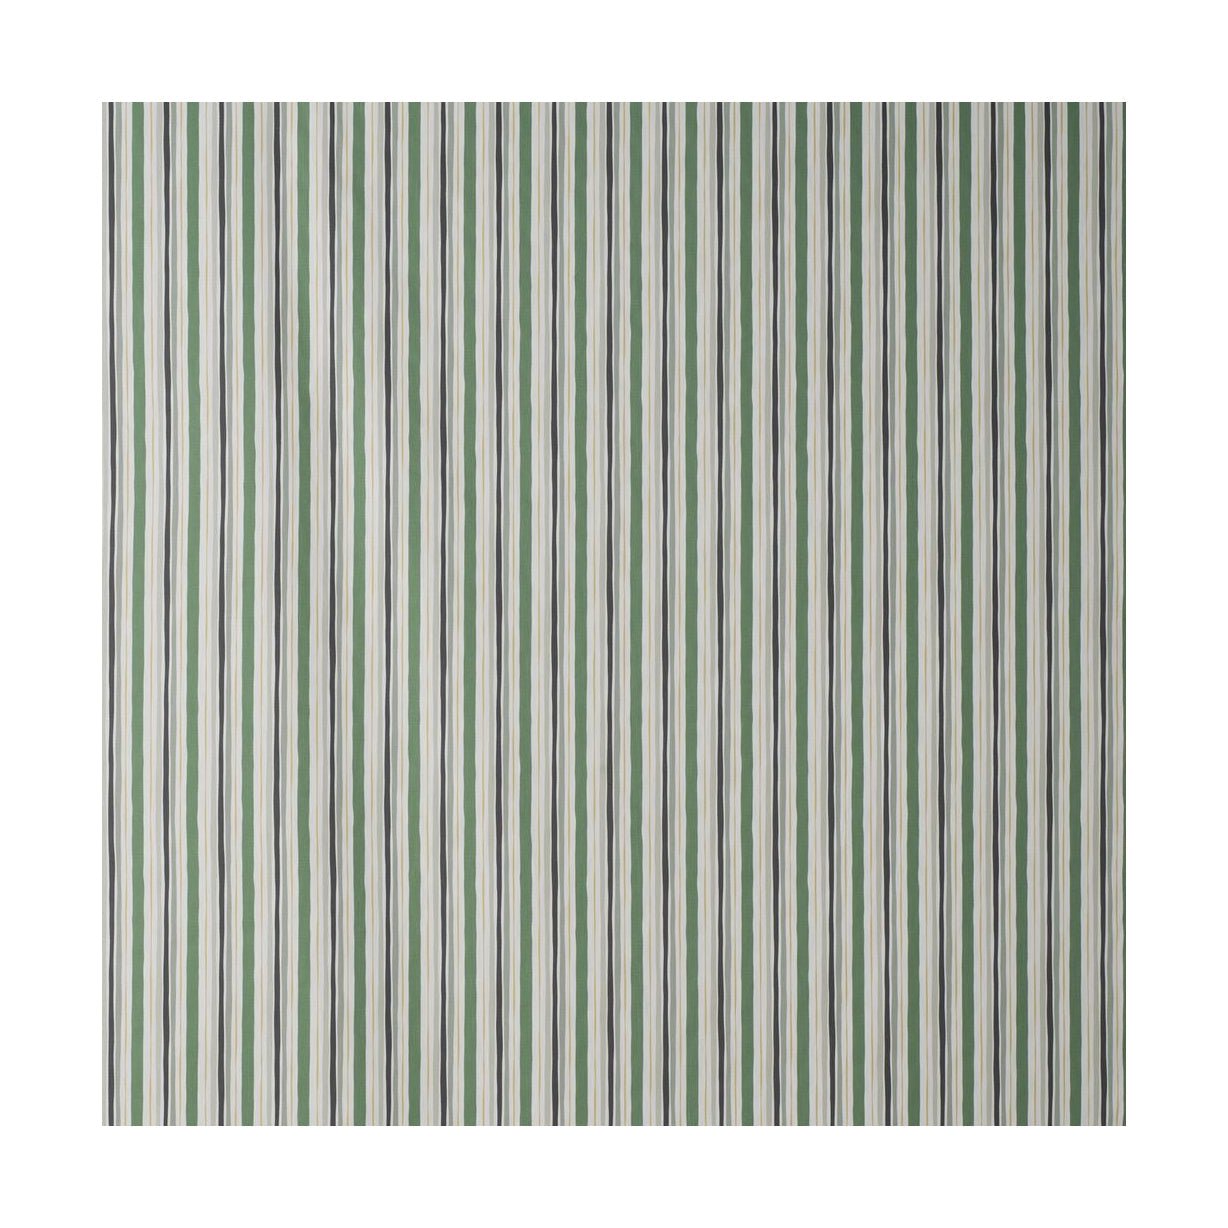 Spira randi stofbreedte 150 cm (prijs per meter), groen